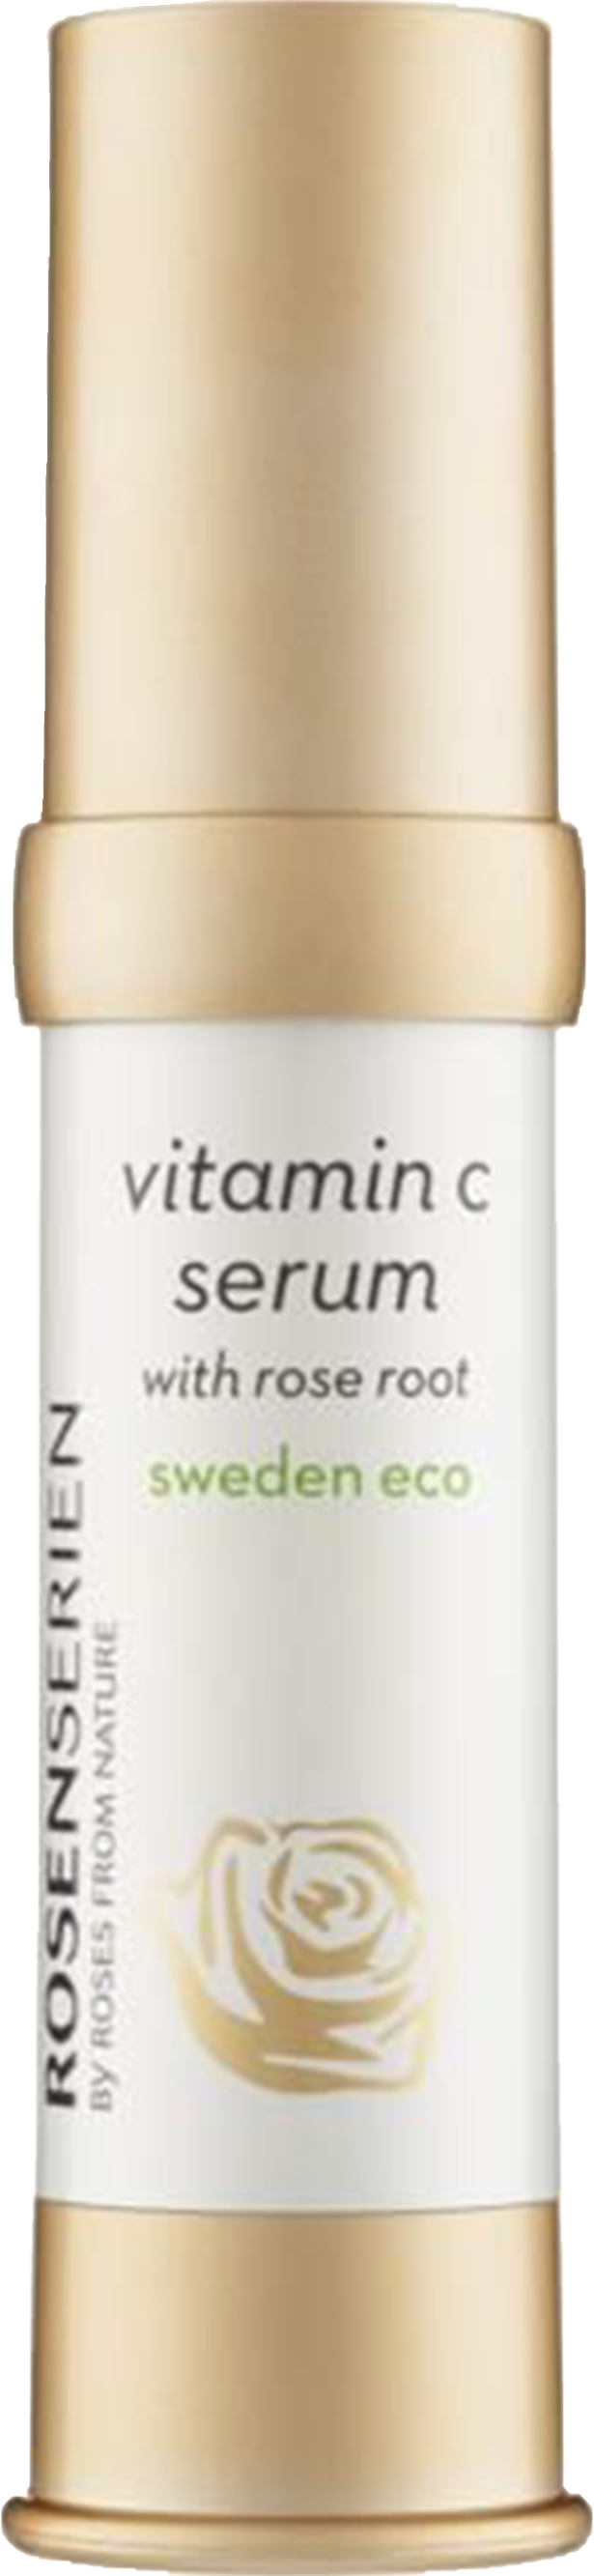 Rosenserien Vitamin C Serum Rose Root 20 ml